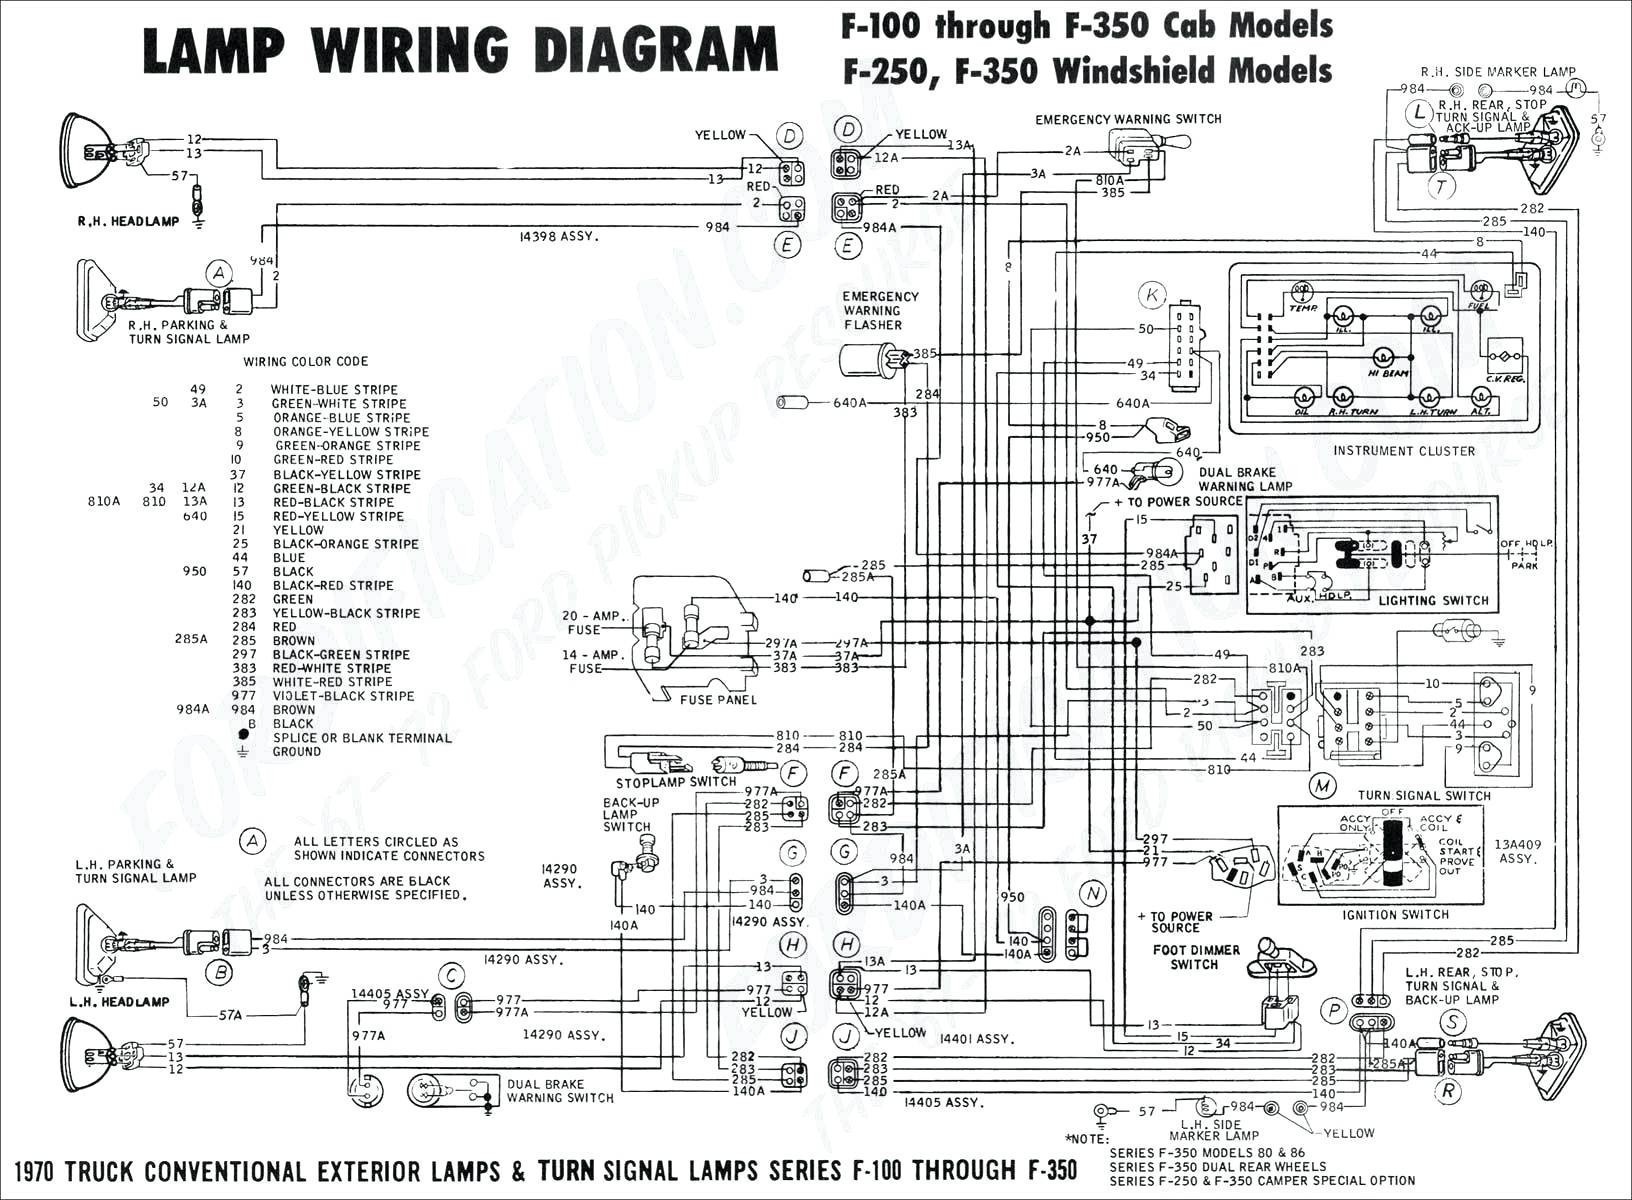 Starter solenoid Wiring Diagram ford E 350 solenoid Diagram Wiring Diagram Pass Of Starter solenoid Wiring Diagram